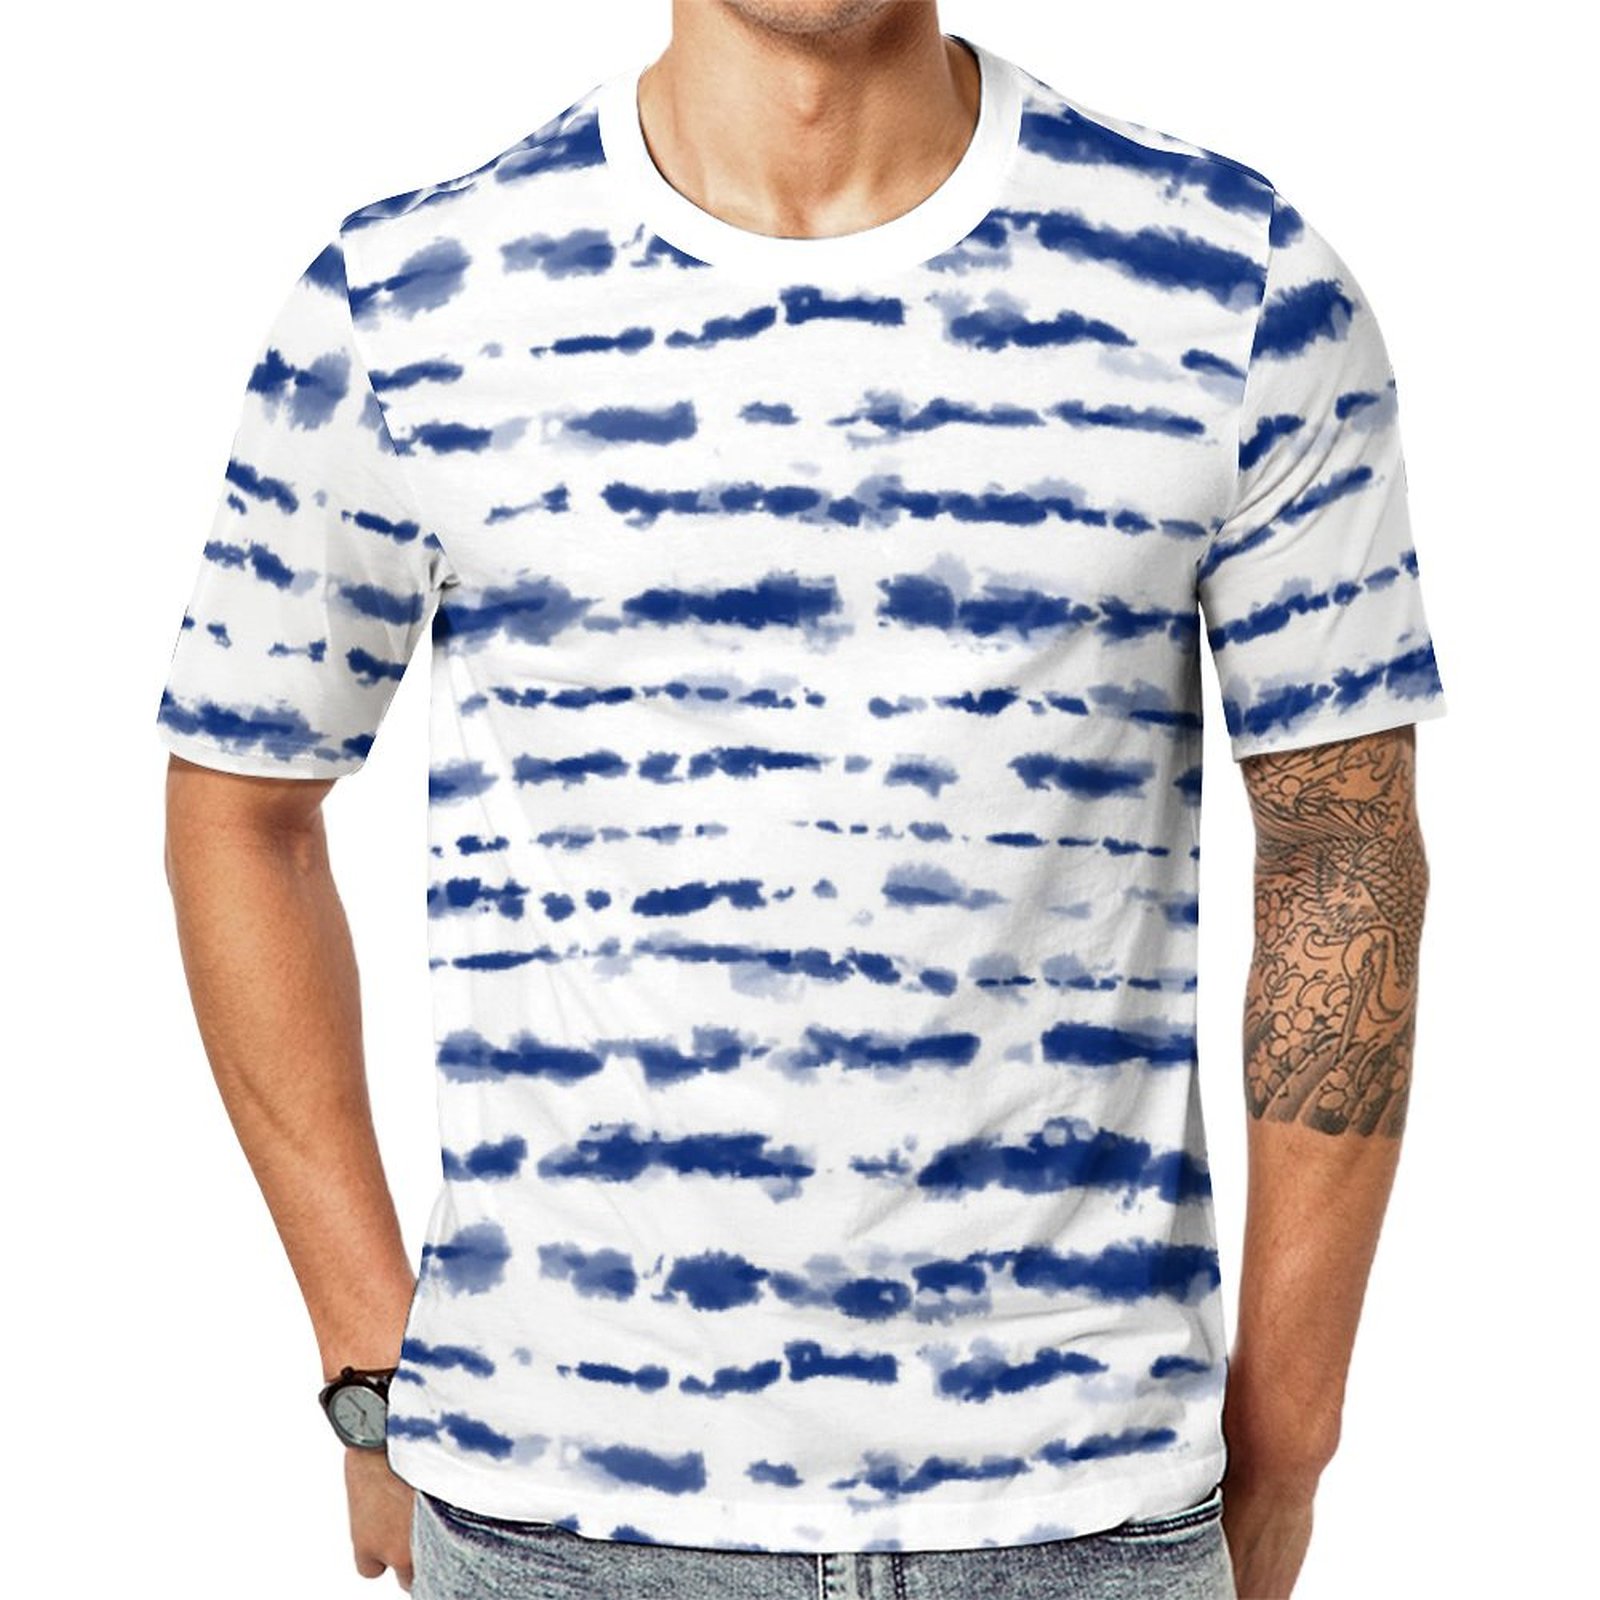 Indigo Batik Japanese Shibori Stripes Print Short Sleeve Print Unisex Tshirt Summer Casual Tees for Men and Women Coolcoshirts